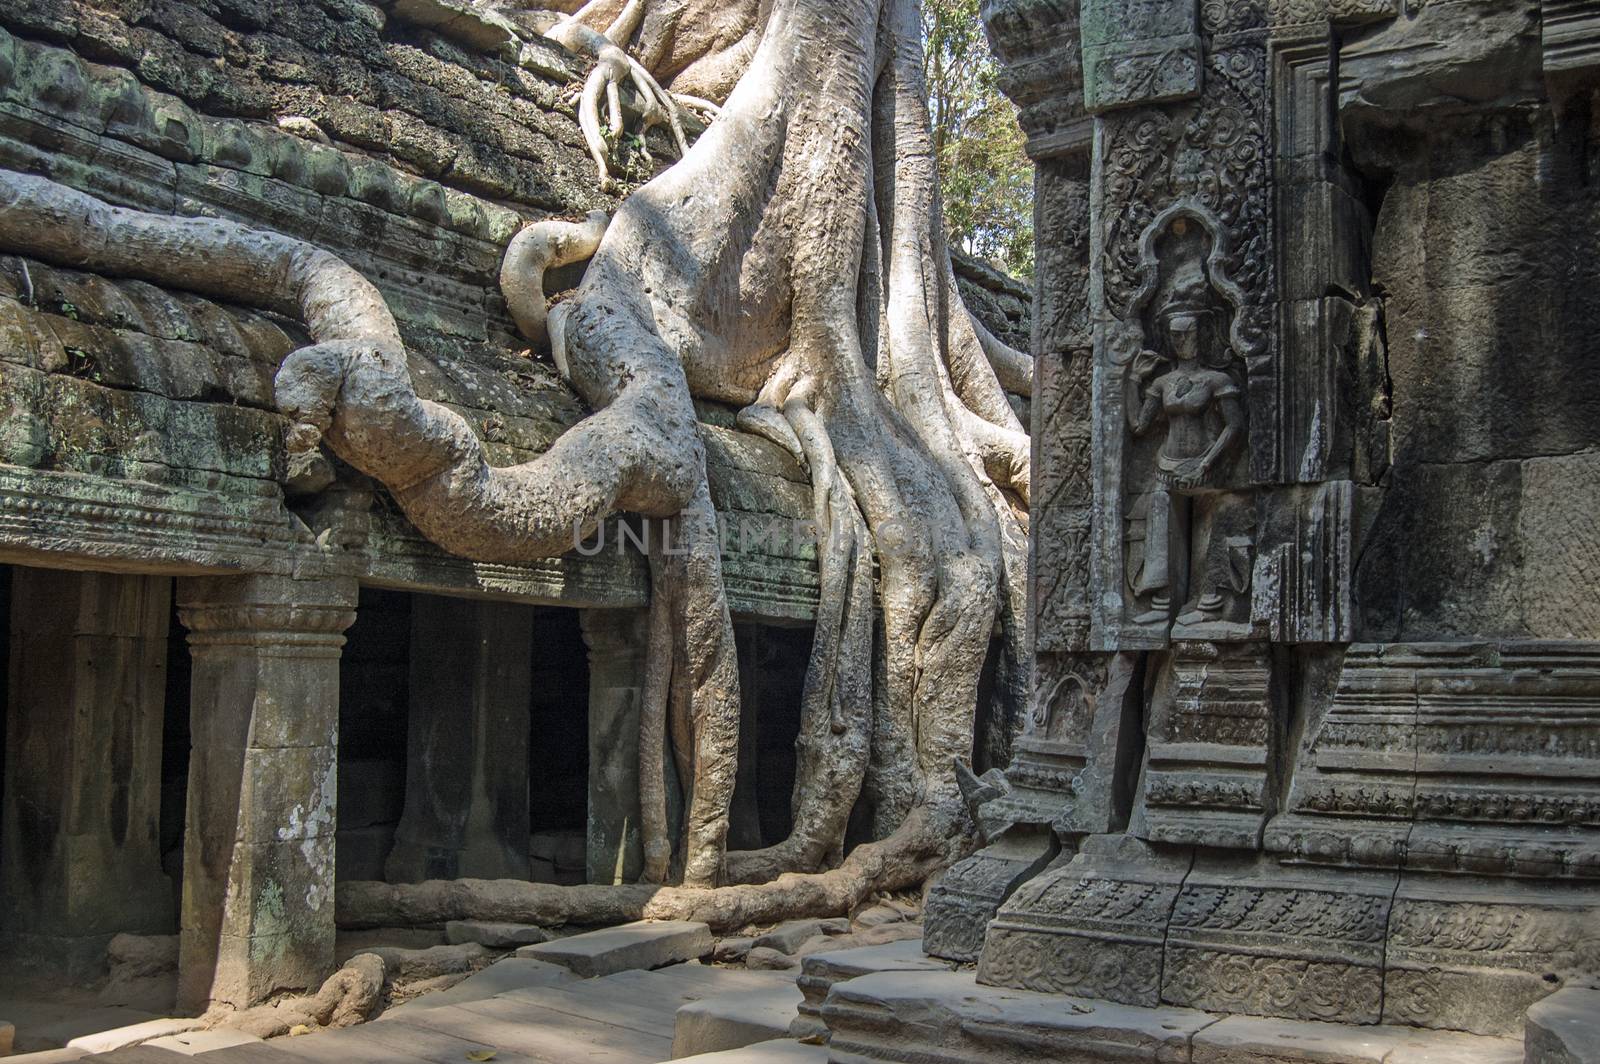 Kapok tree and Temple, Cambodia by BasPhoto